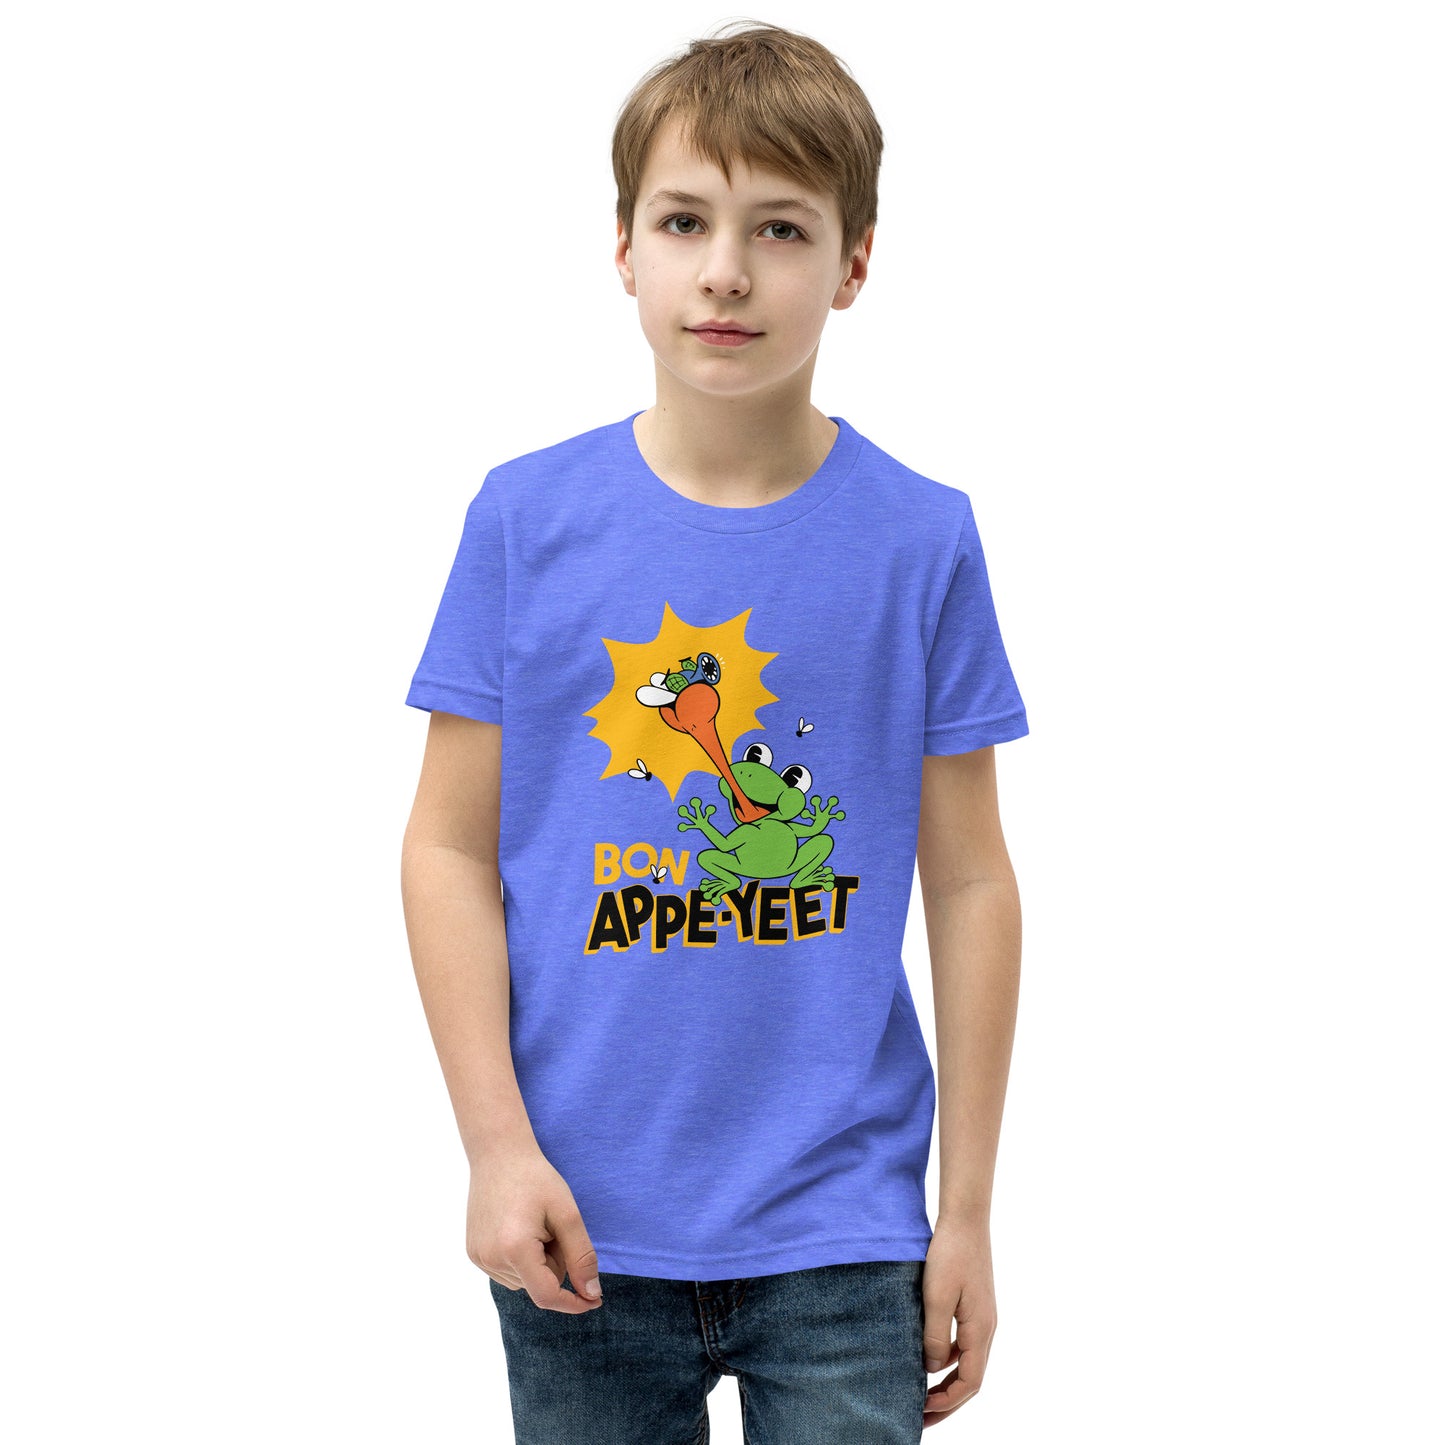 Bon Appe-Yeet Youth Short Sleeve T-Shirt